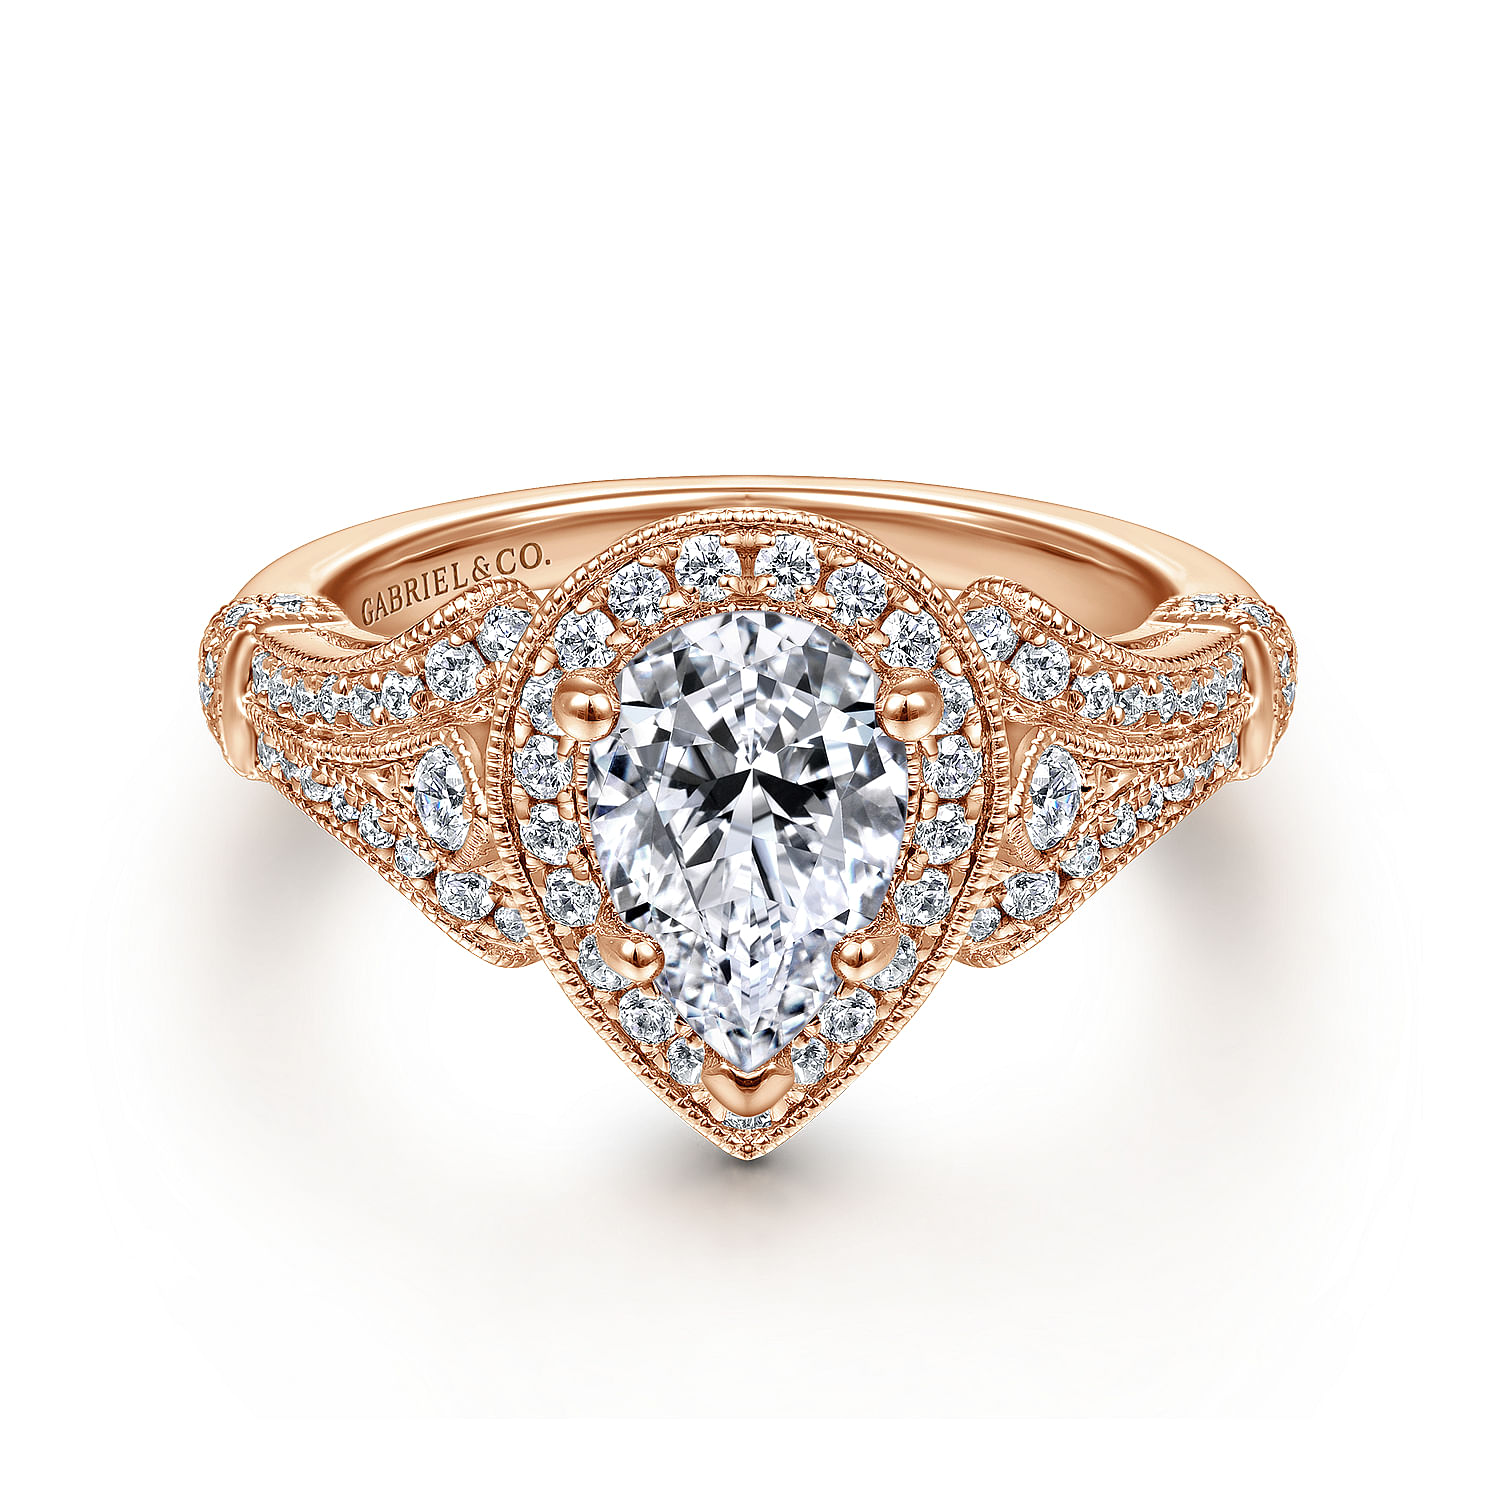 Delilah - Vintage Inspired 14K Rose Gold Pear Shape Halo Diamond Engagement Ring